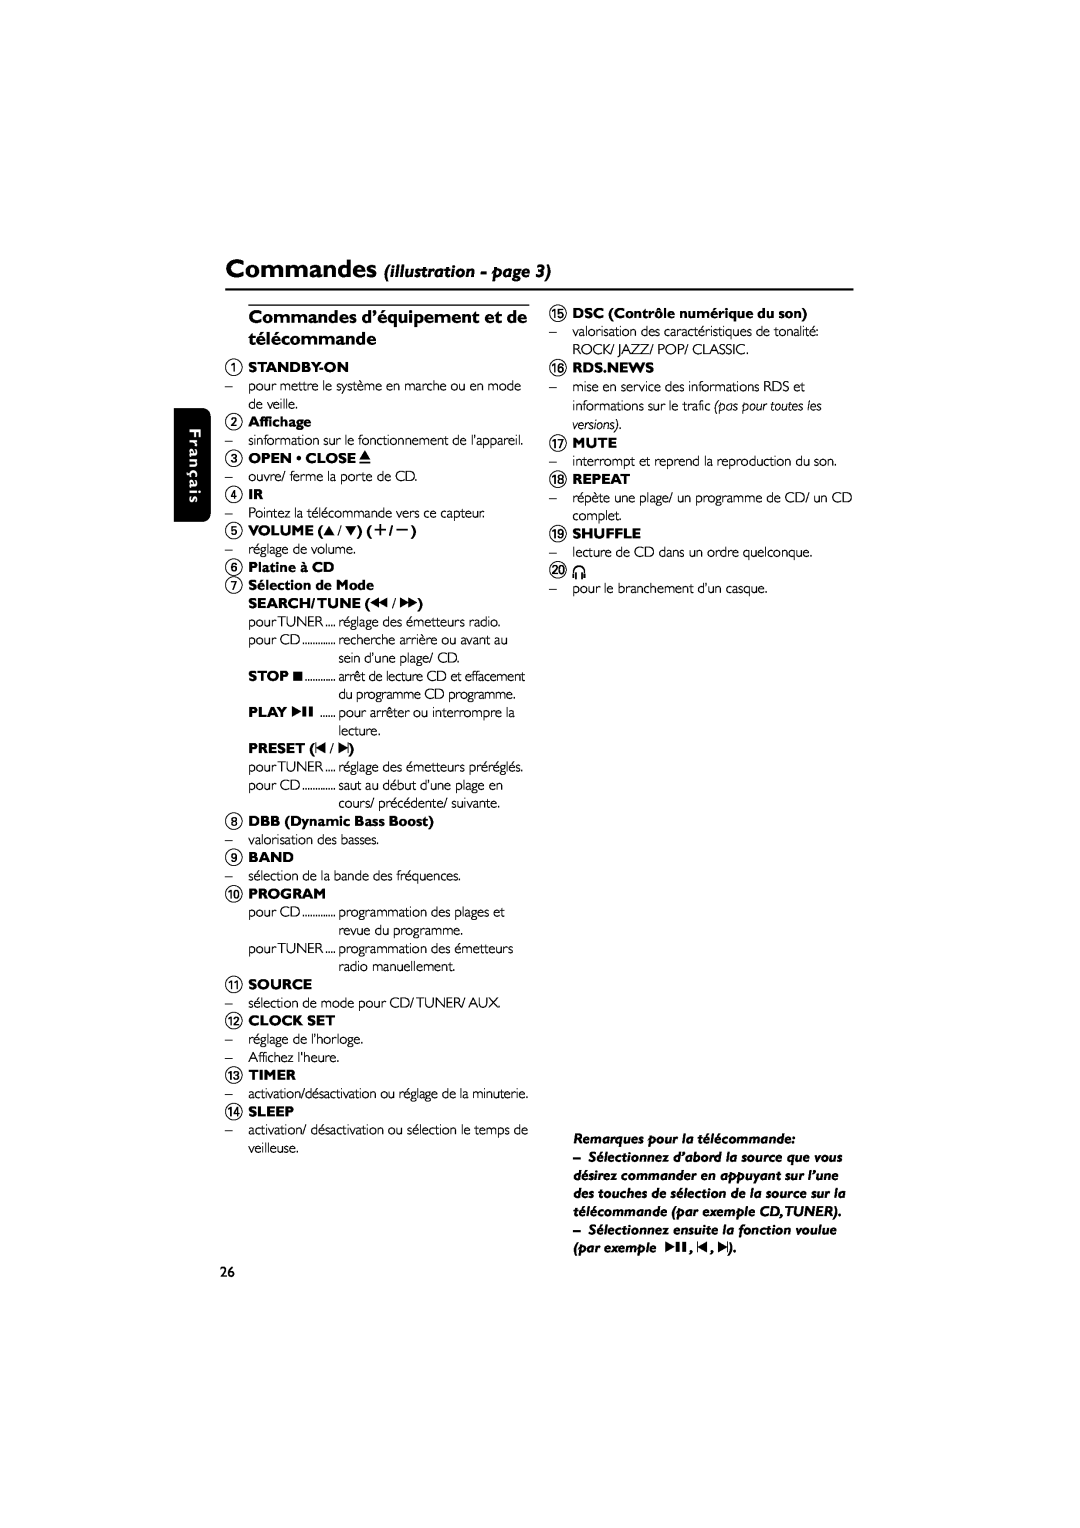 Philips MC235B/37 télécommande, Commandes illustration - page, 1STANDBY-ON, 2Affichage, OPEN CLOSEç, VOLUME 3 / 4 +, Band 